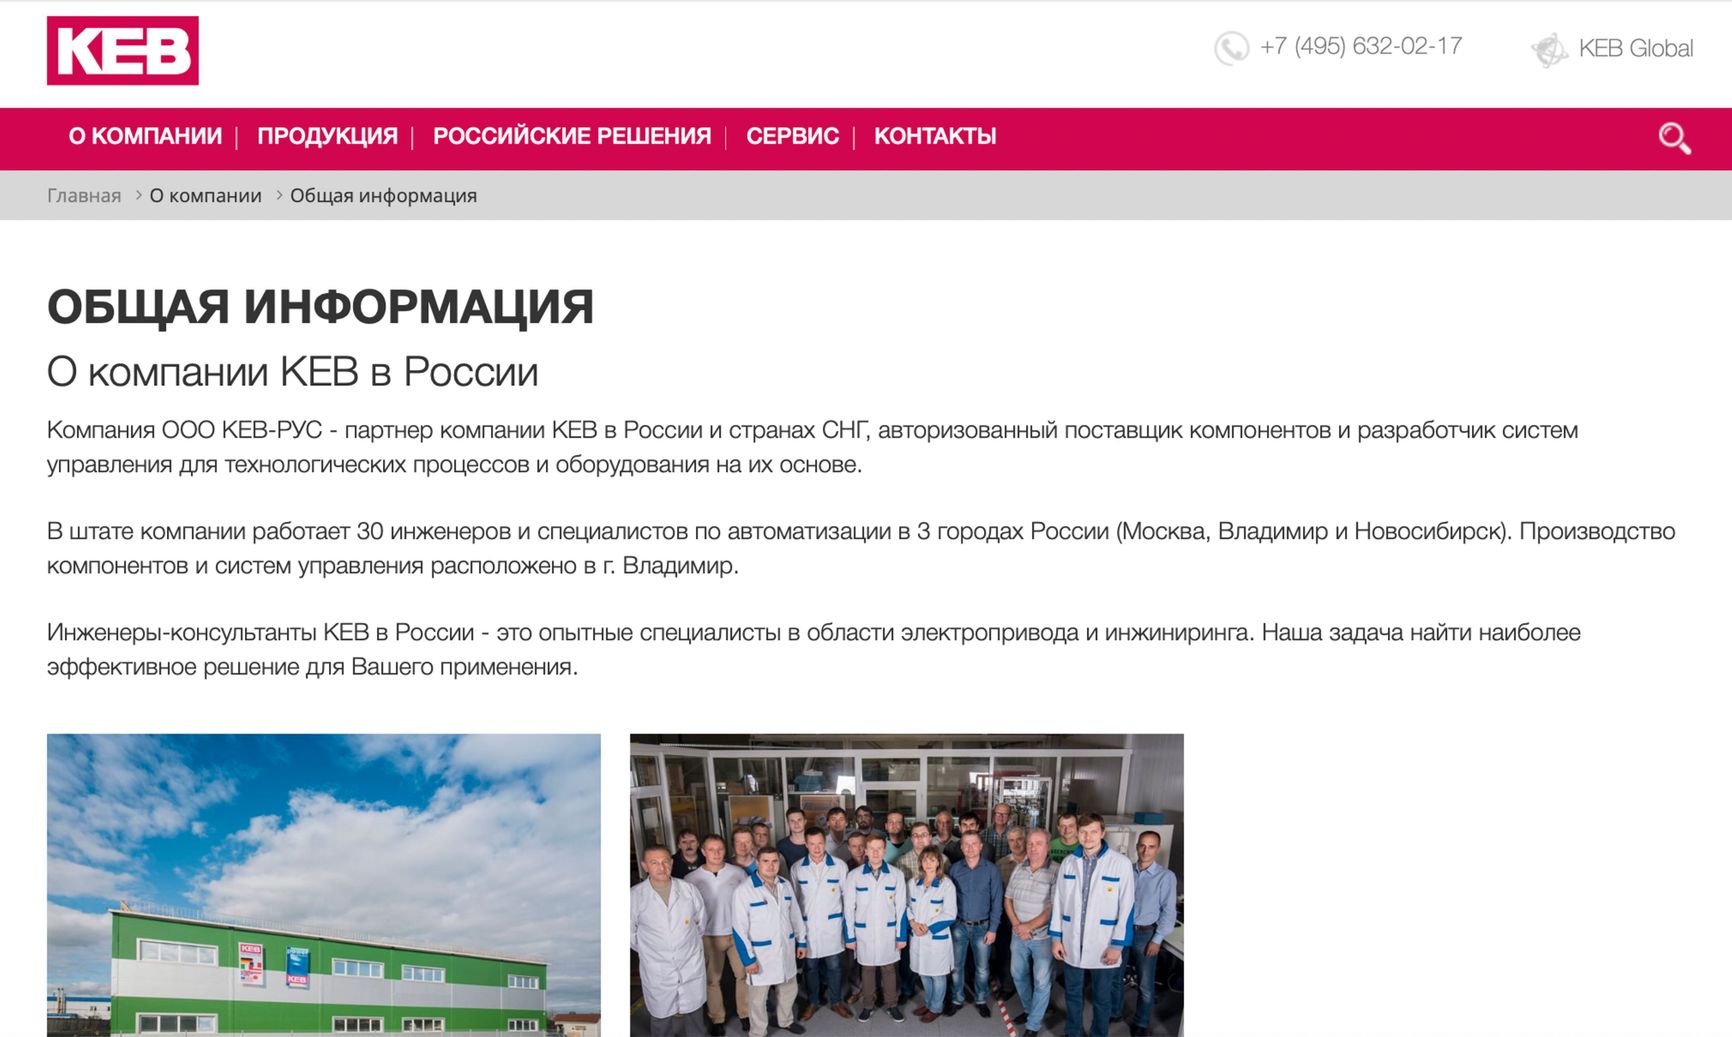 KEB-RUS website